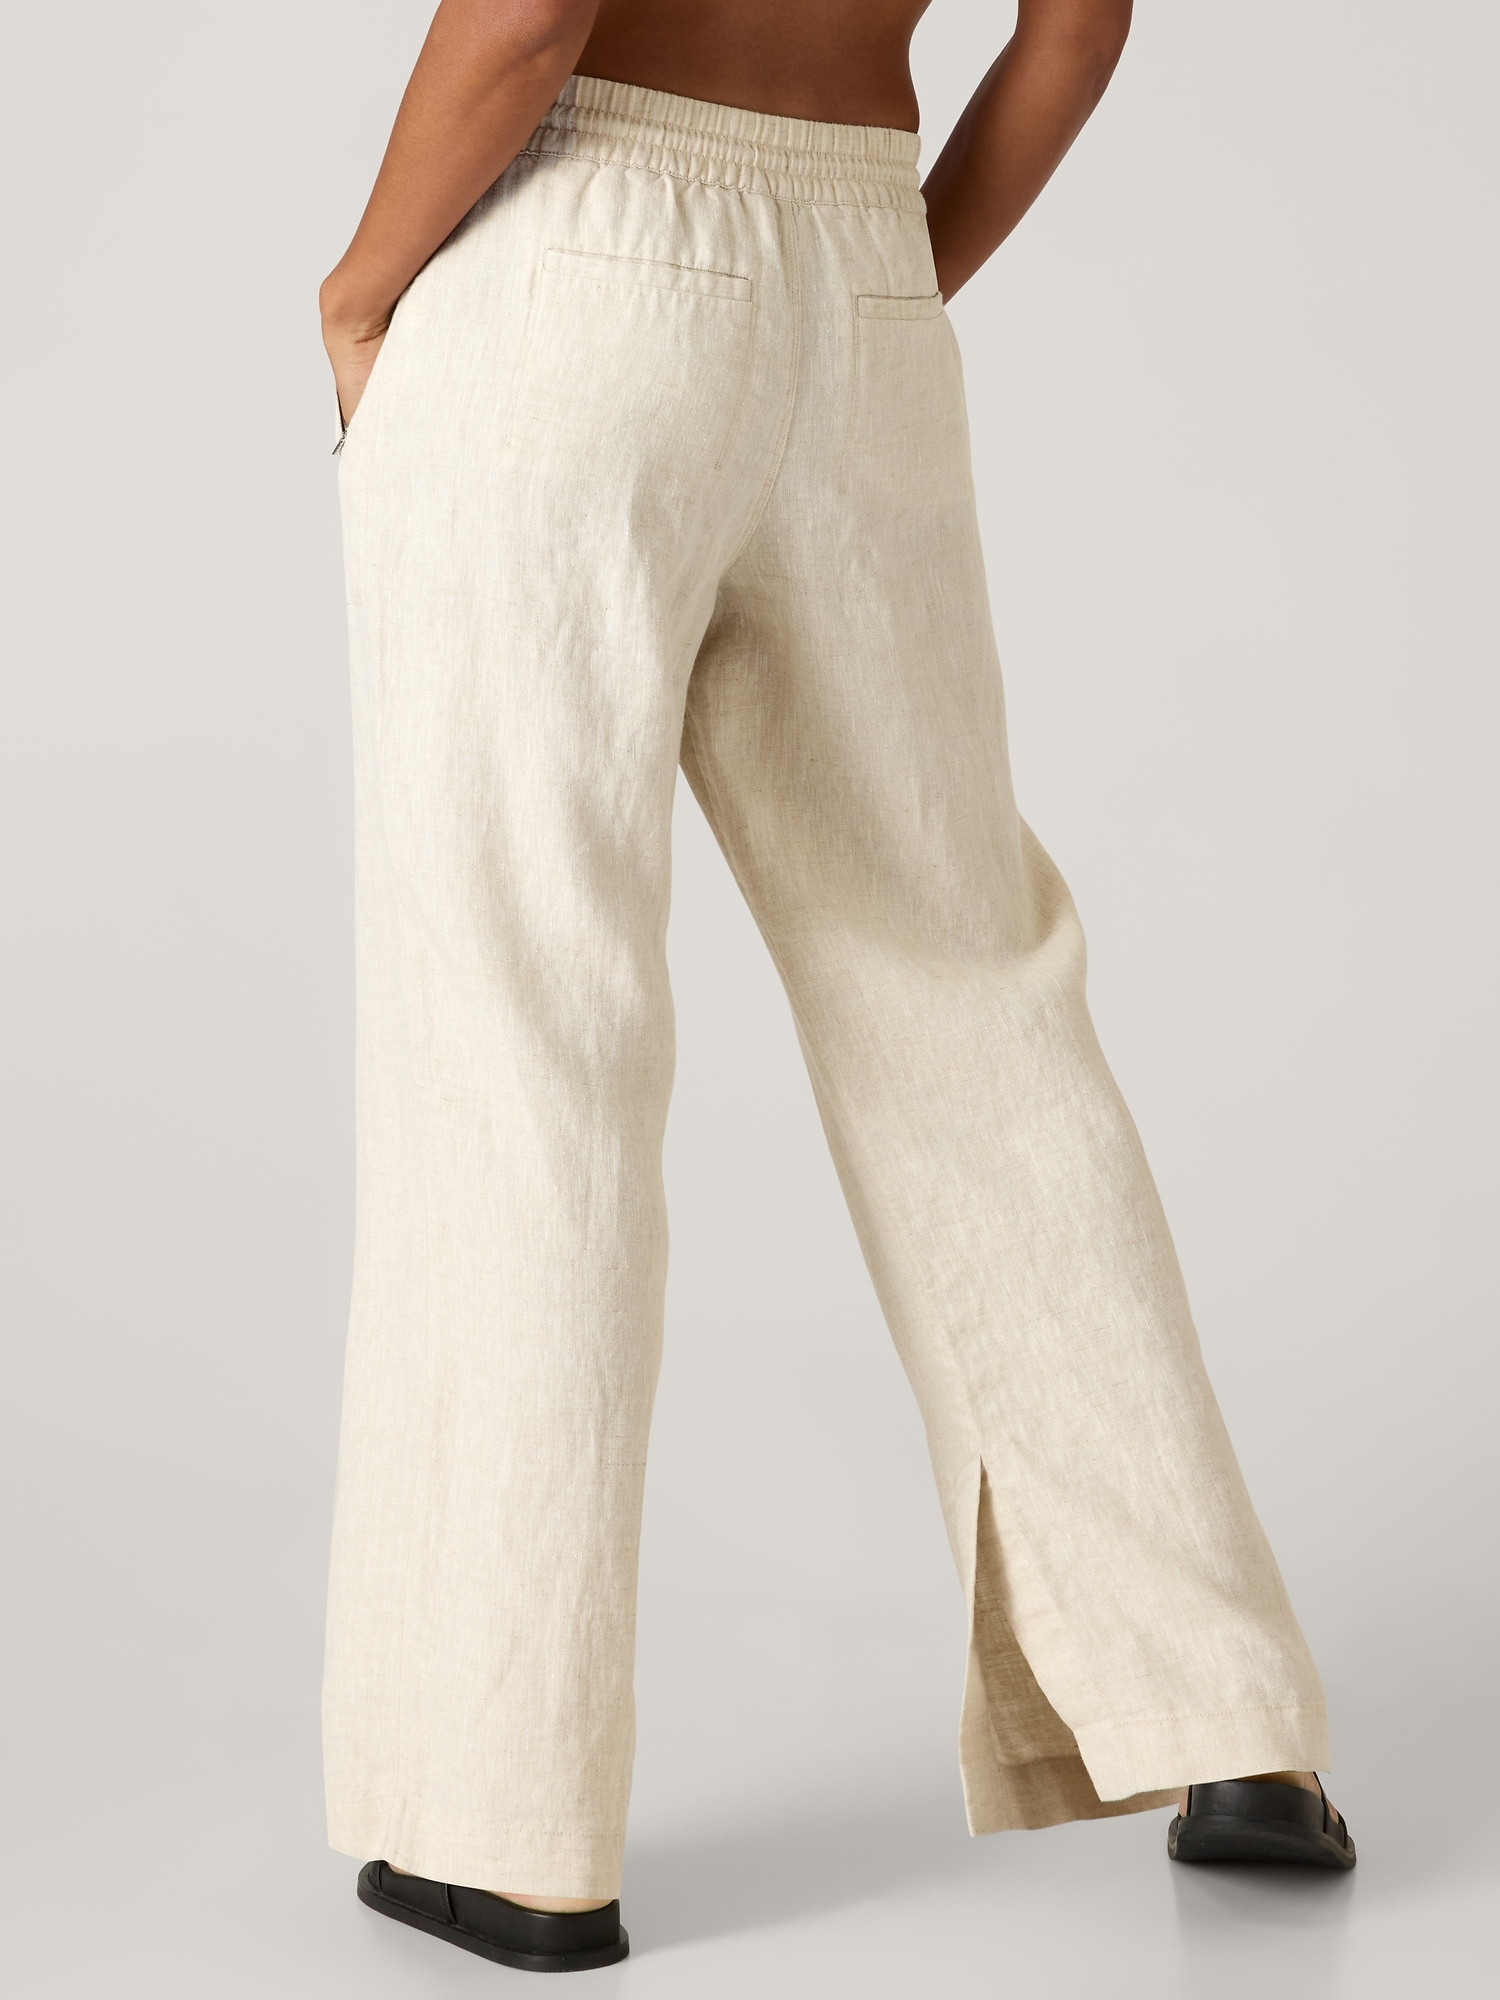 Flared Boho Pants, Wide-leg Linen Trousers, High Waisted Pants